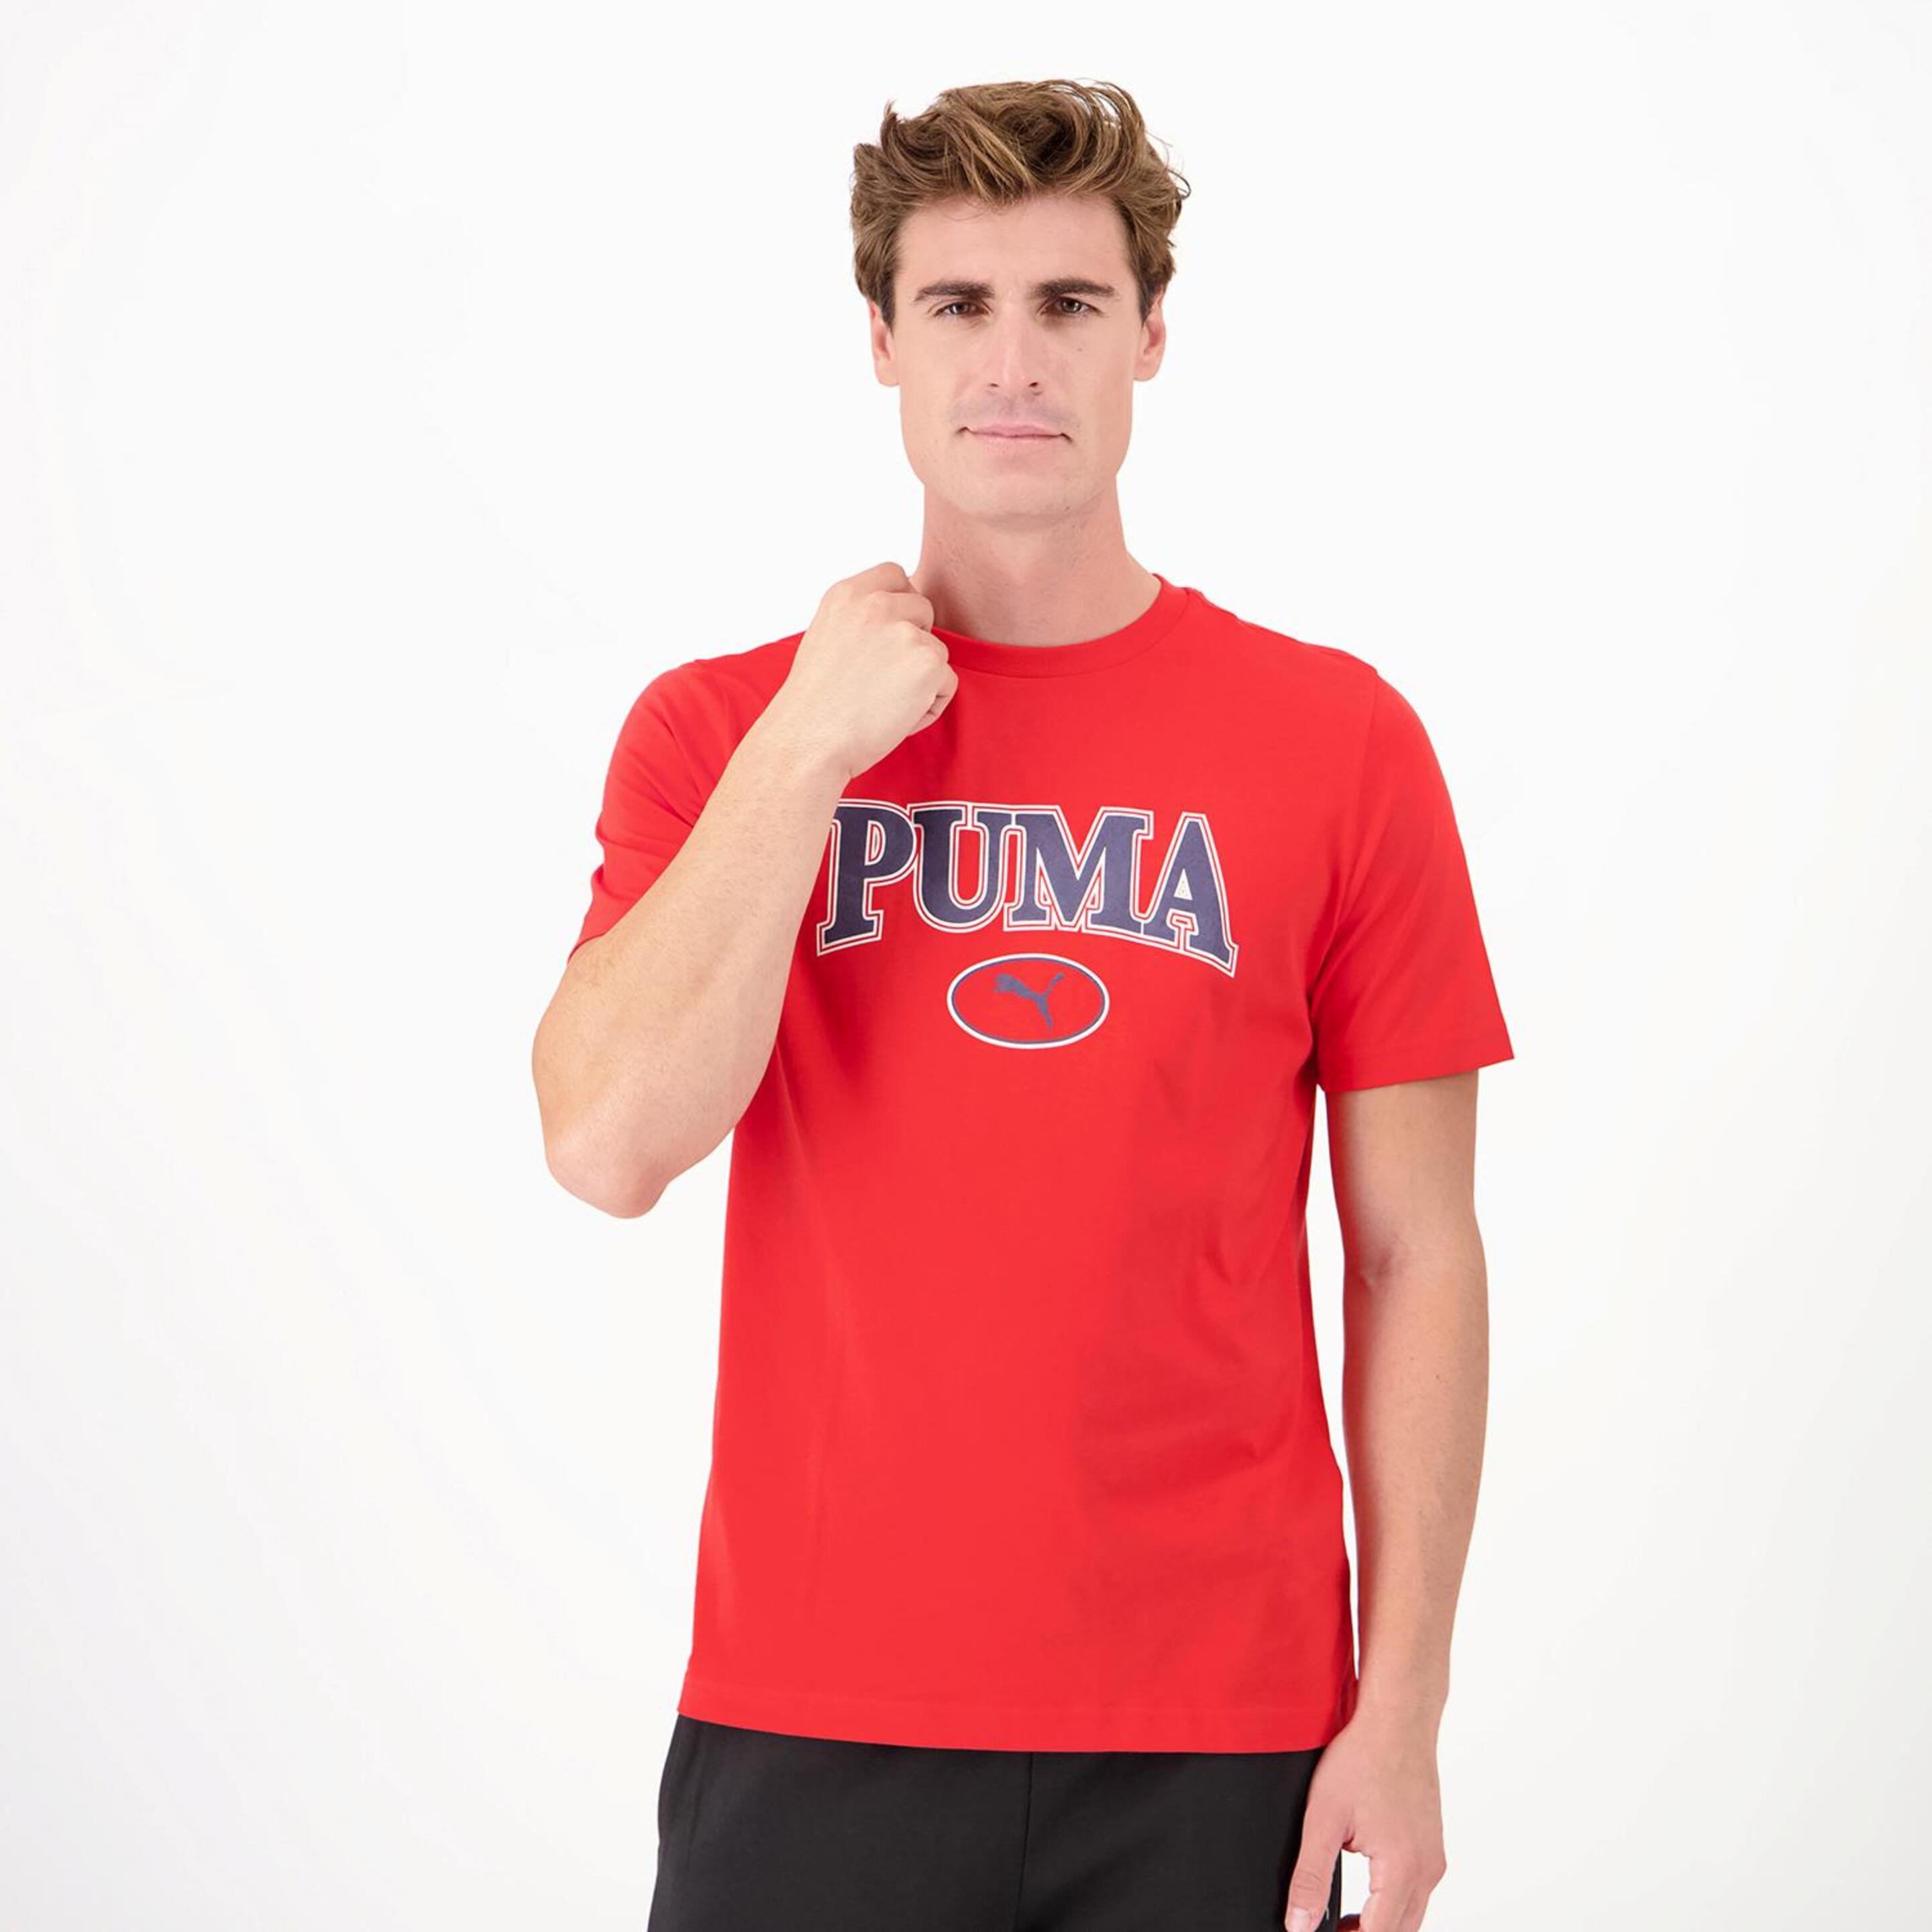 Puma Squad - Rojo - Camiseta Hombre